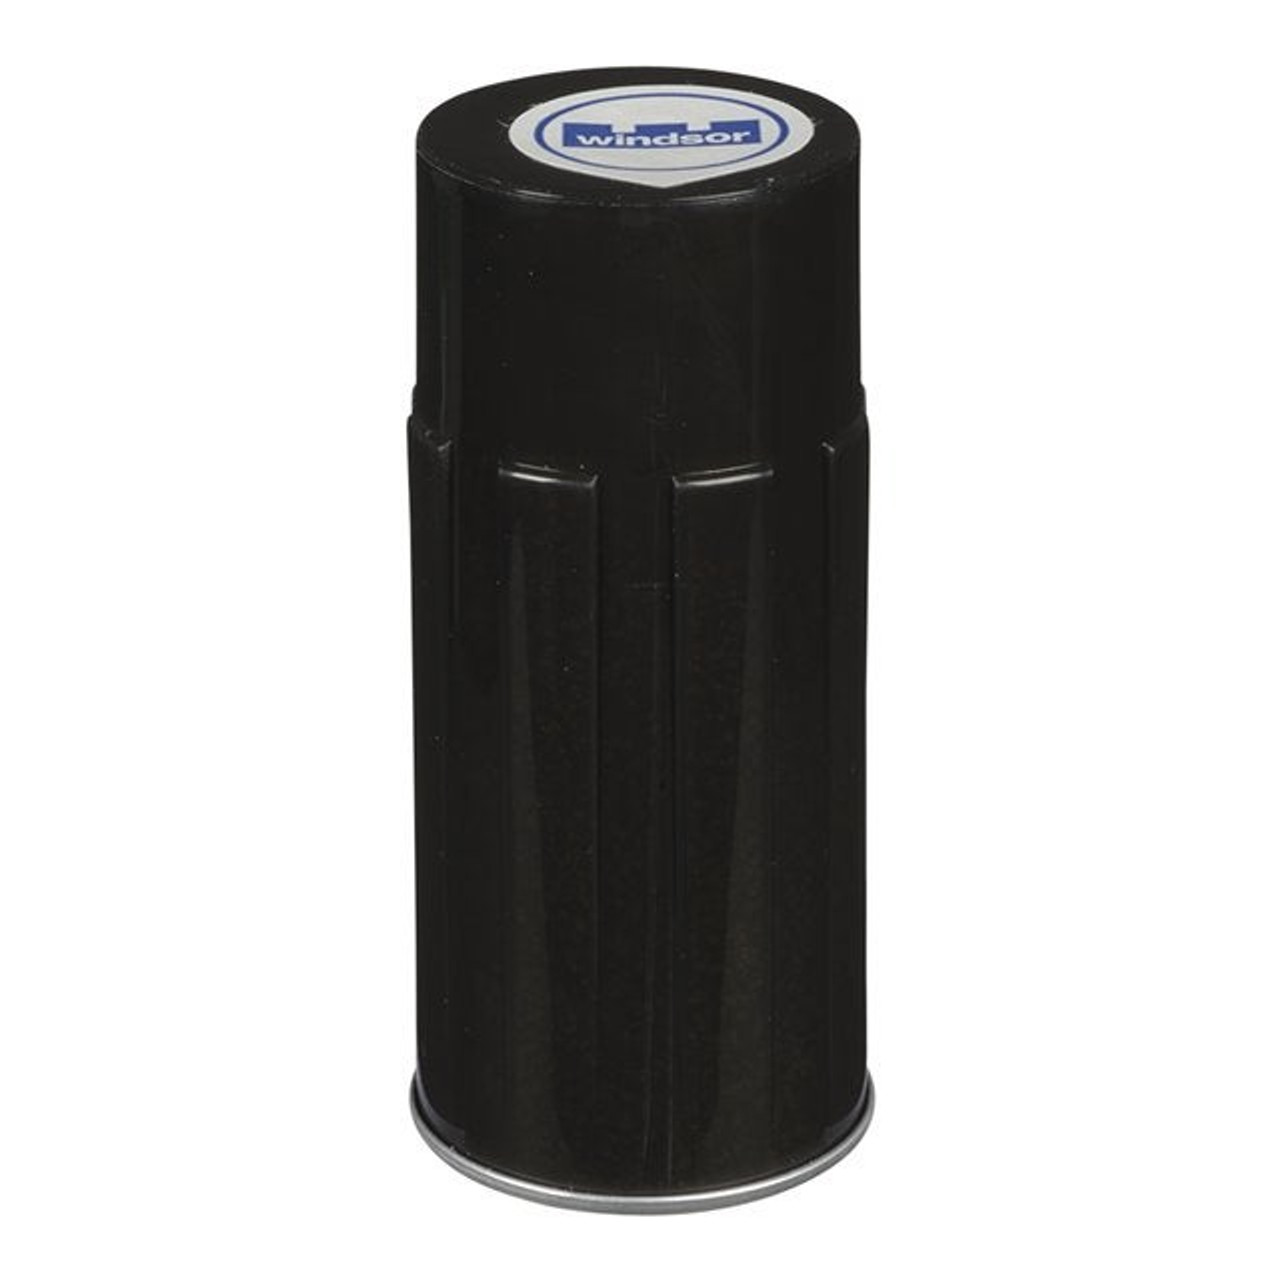 Windsor Pepper, Spice, Disposable Shaker, 1.5oz | 42G/Unit, 48 Units/Case